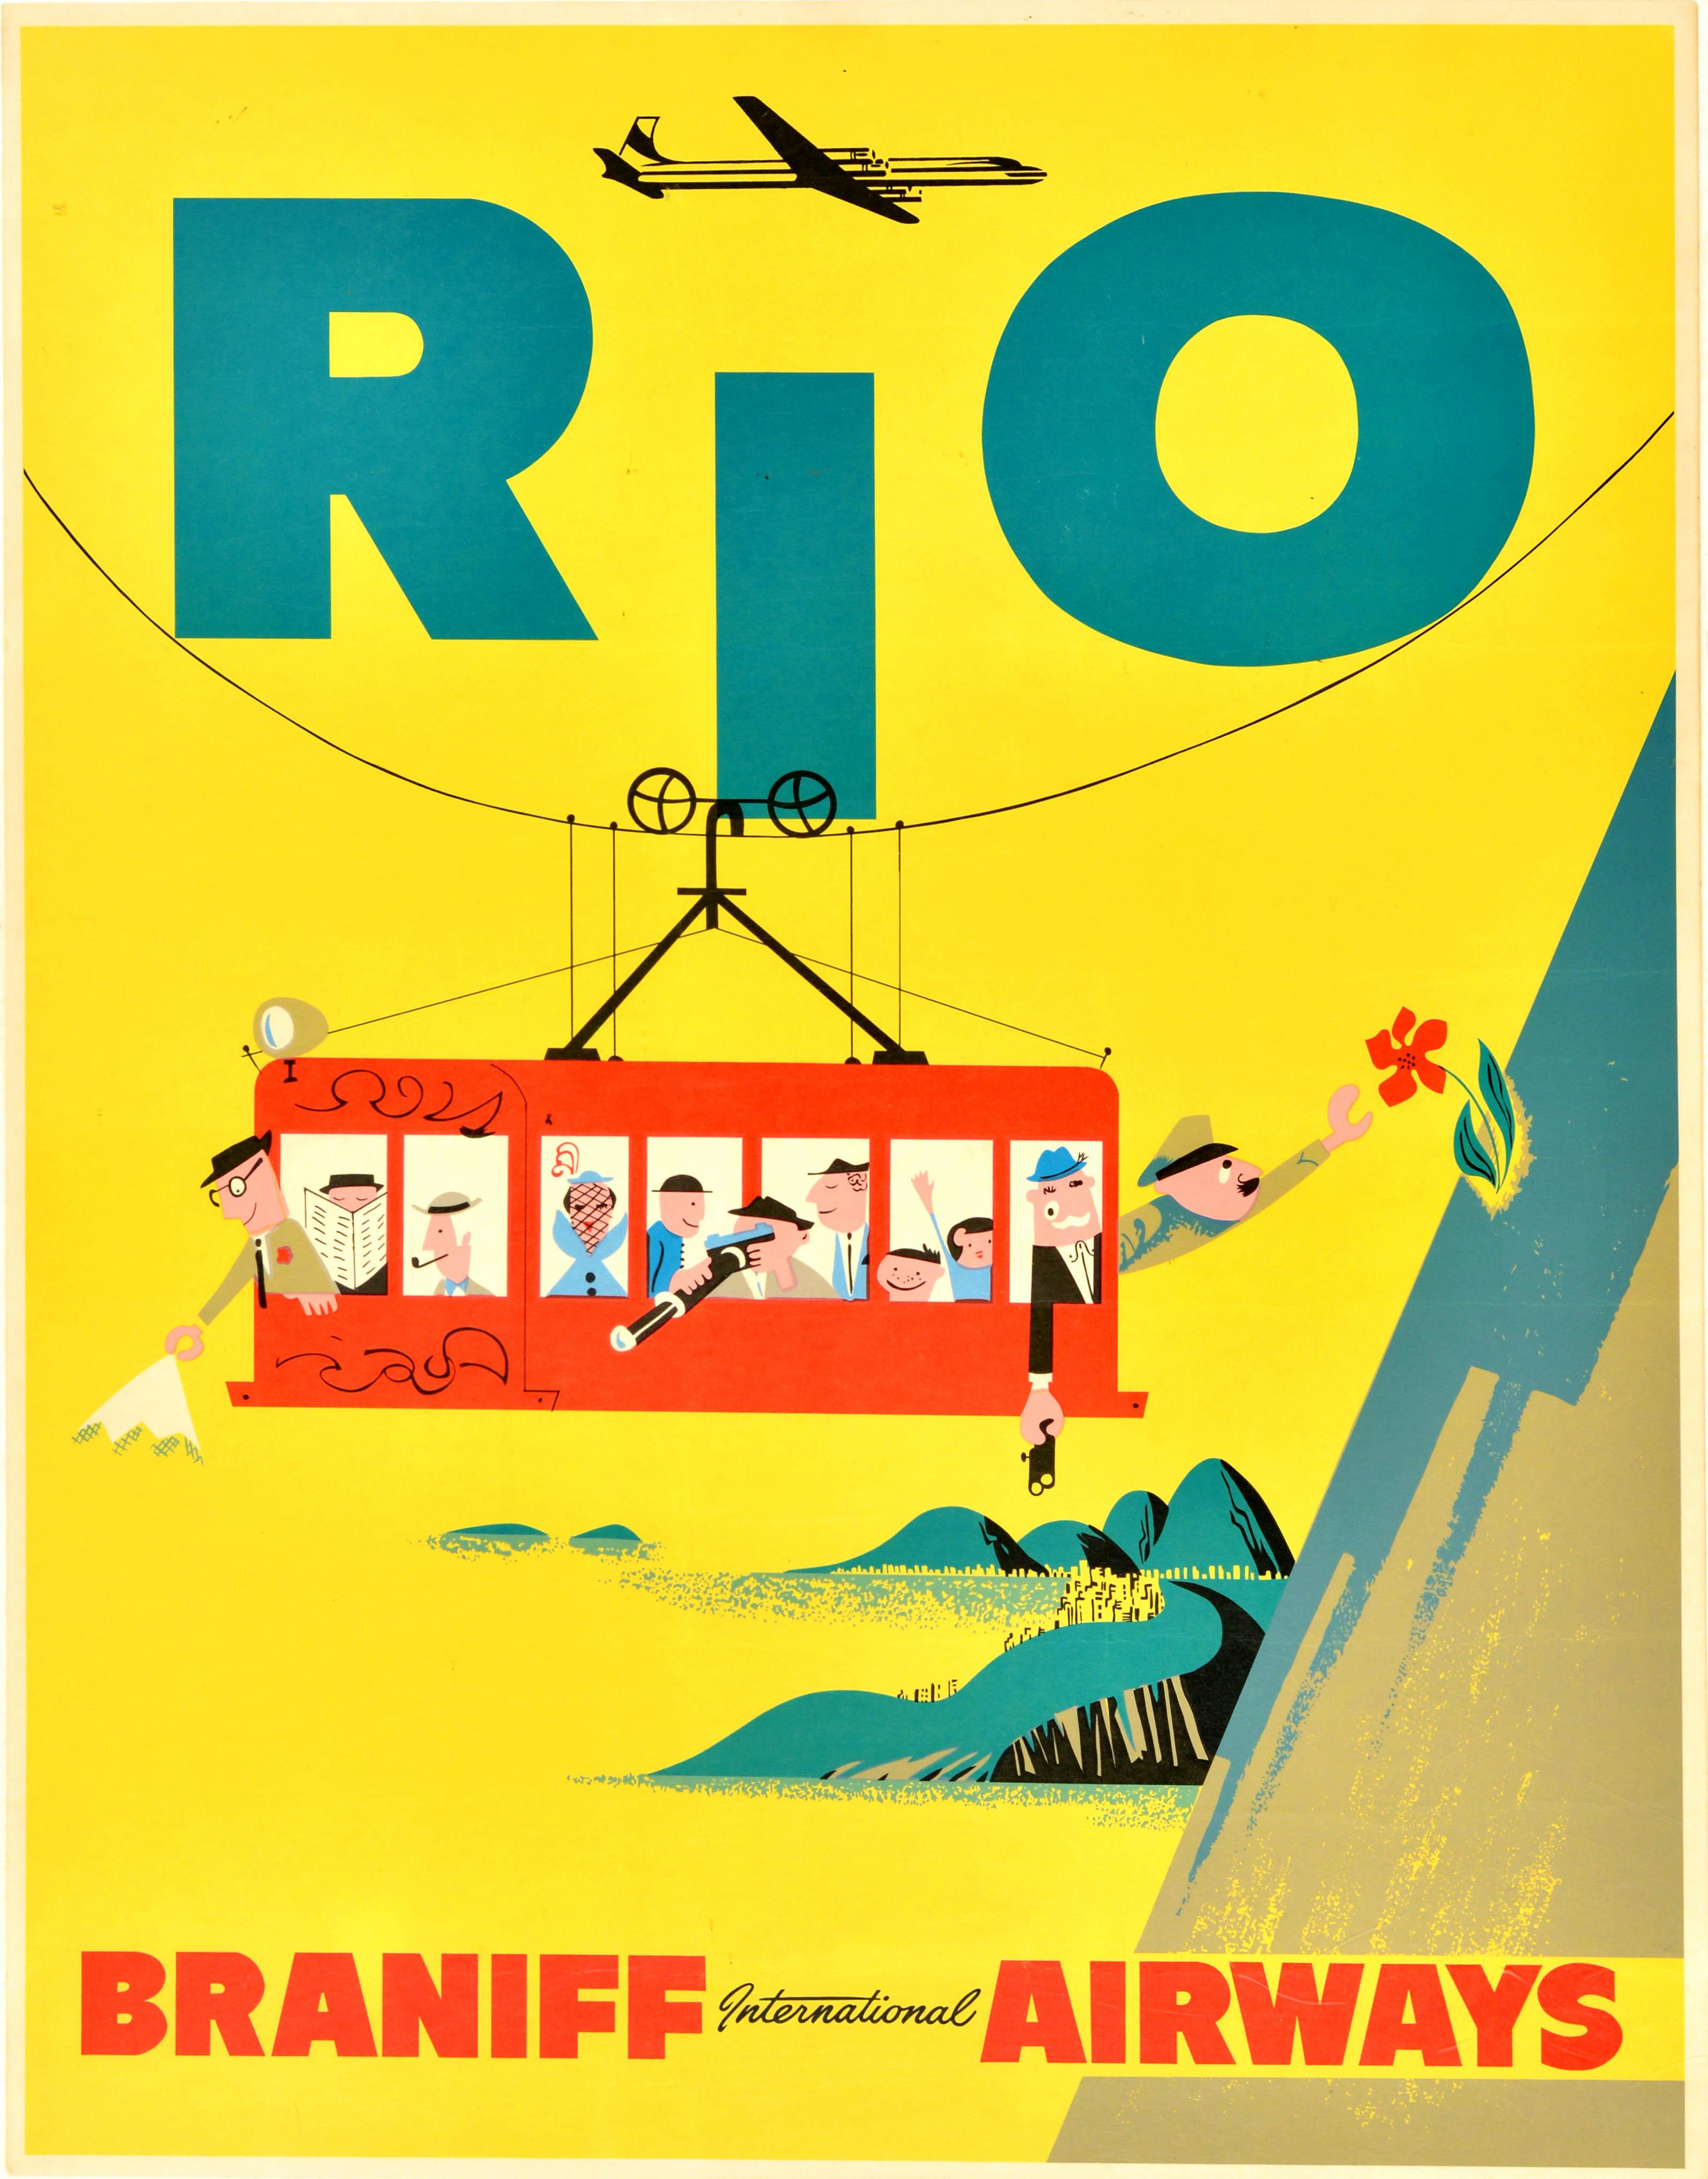 24x36 Rio de Janeiro Brazil Guanabara Bay 1930s Vintage Style Travel Poster 